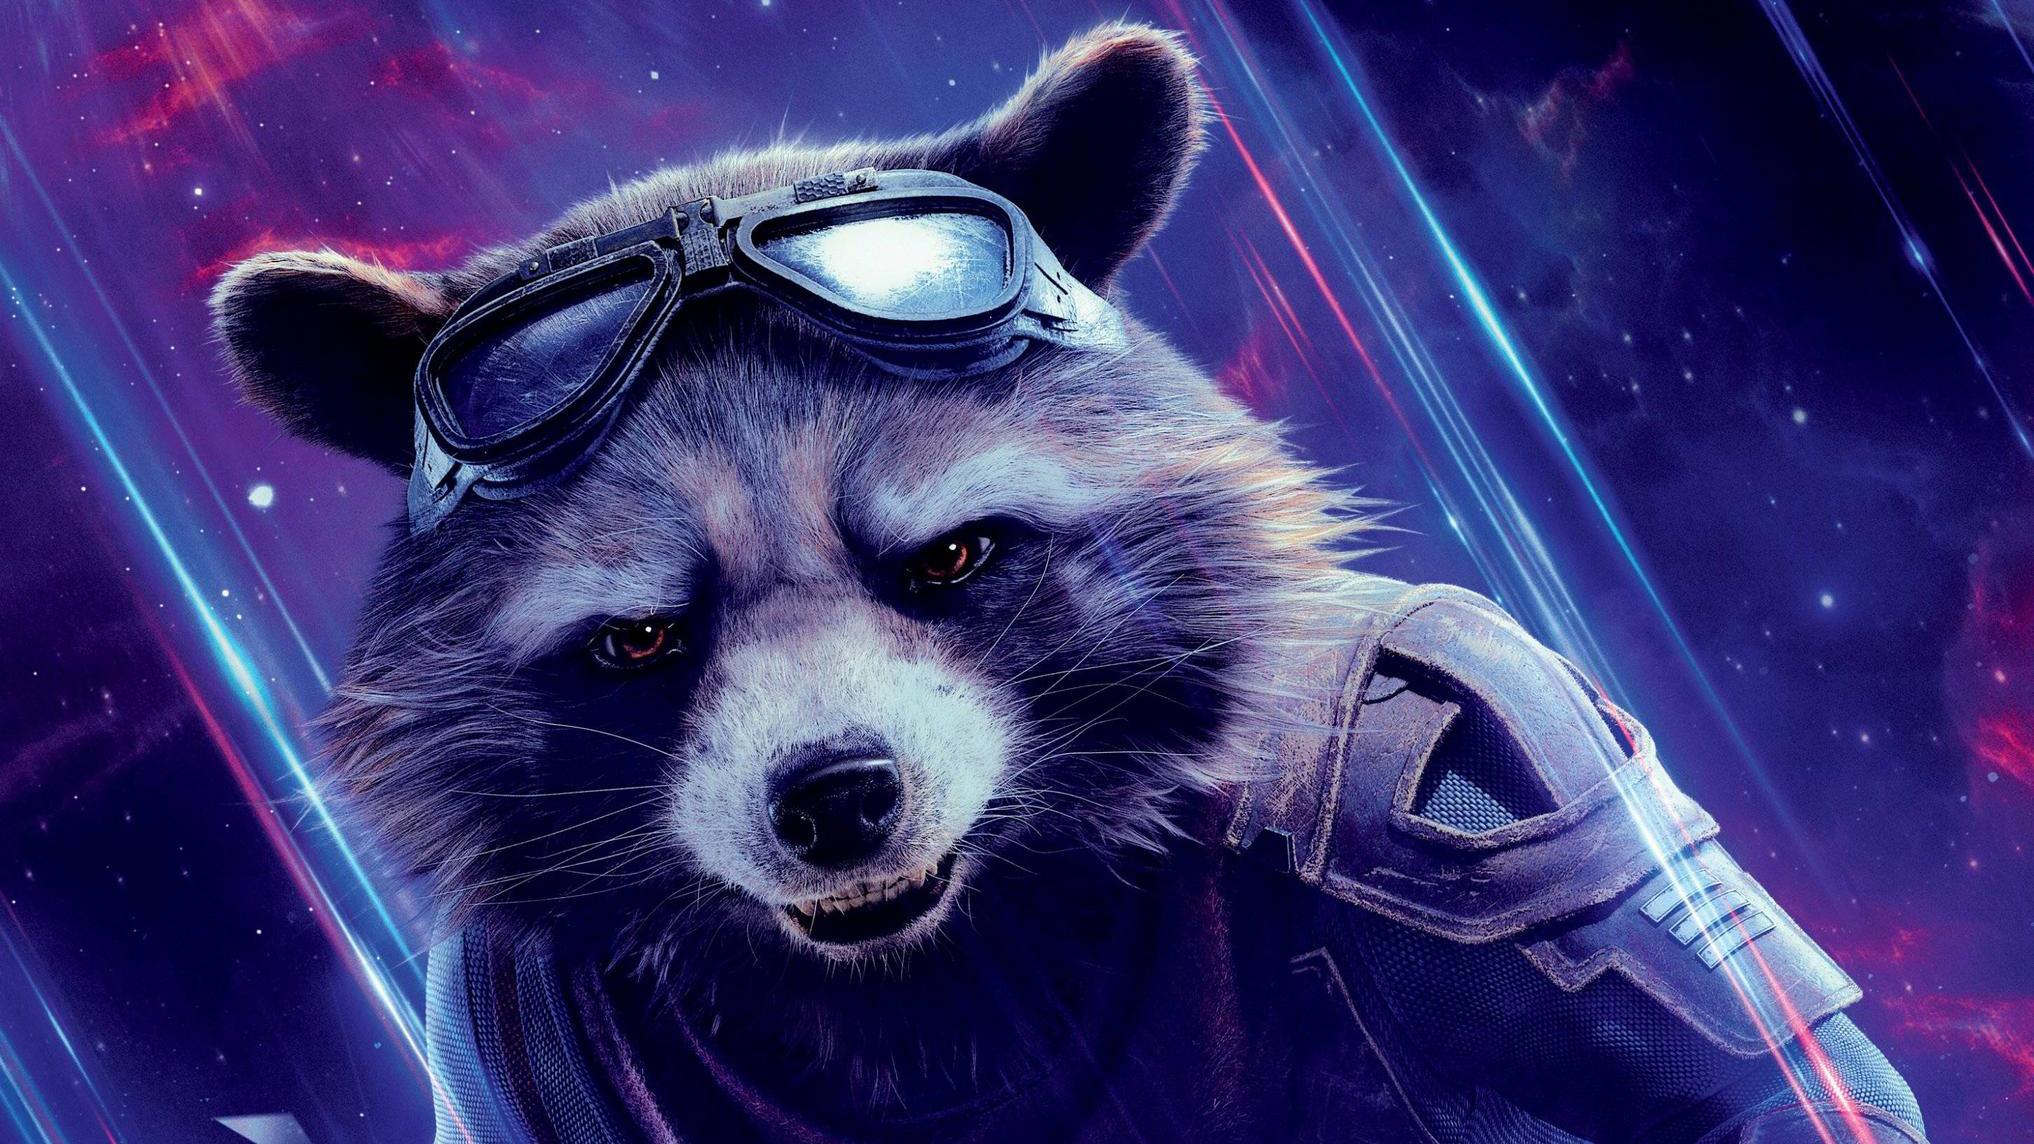 Rocket Raccoon In Avengers Endgame, HD Movies, 4k Wallpaper, Image